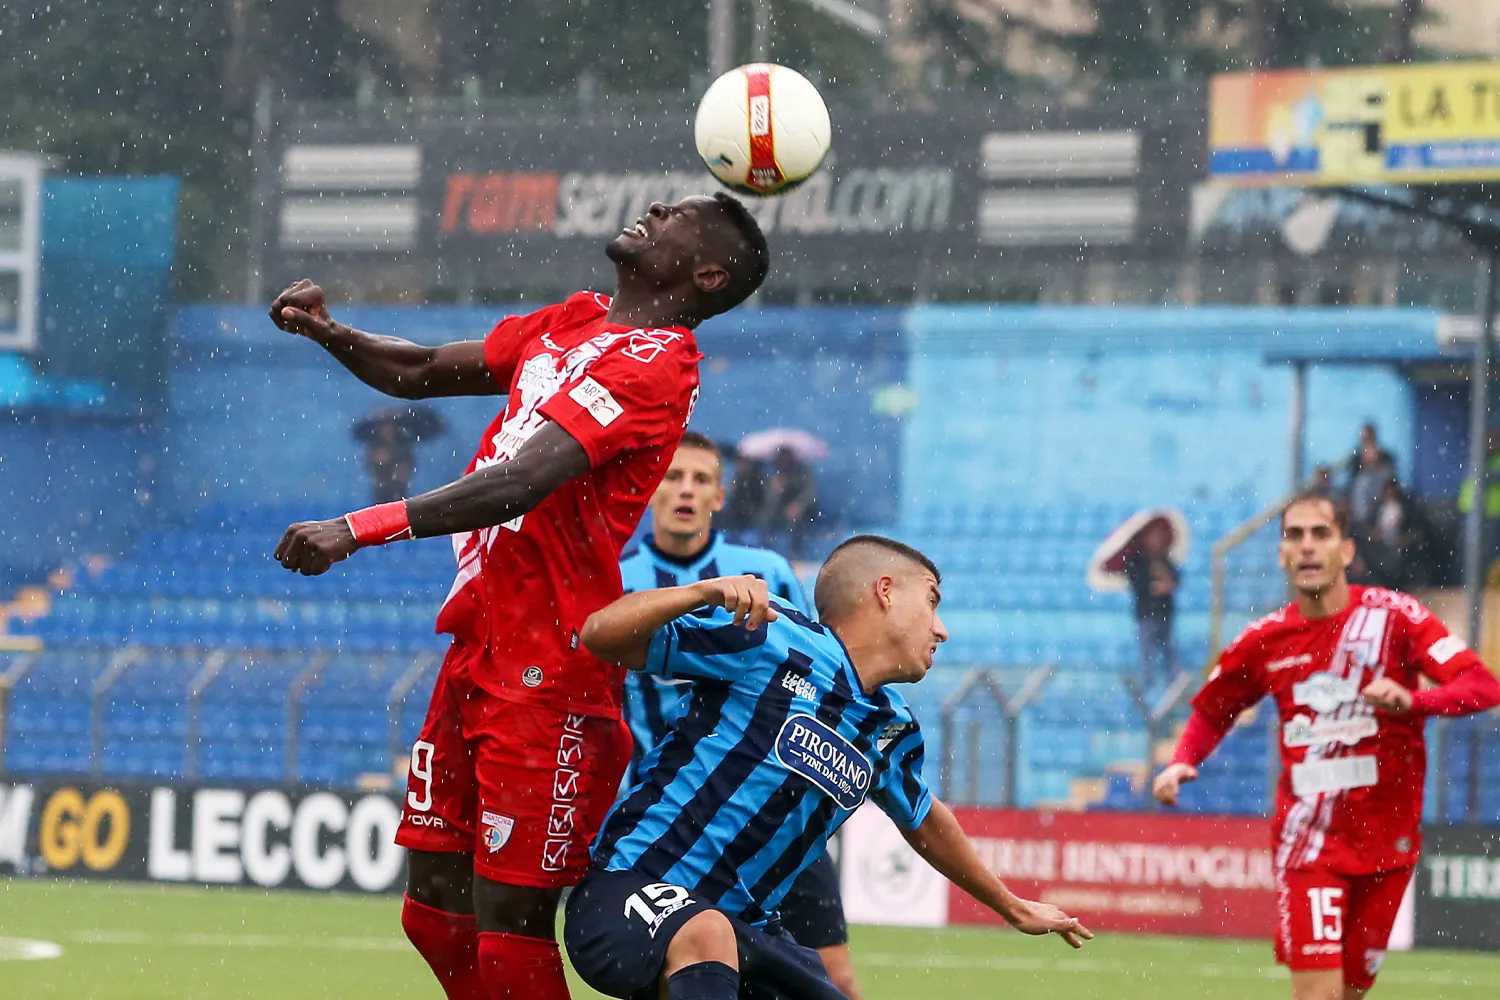 Ghanaian striker Davis Mensah scores for Mantova against Giana Erminio